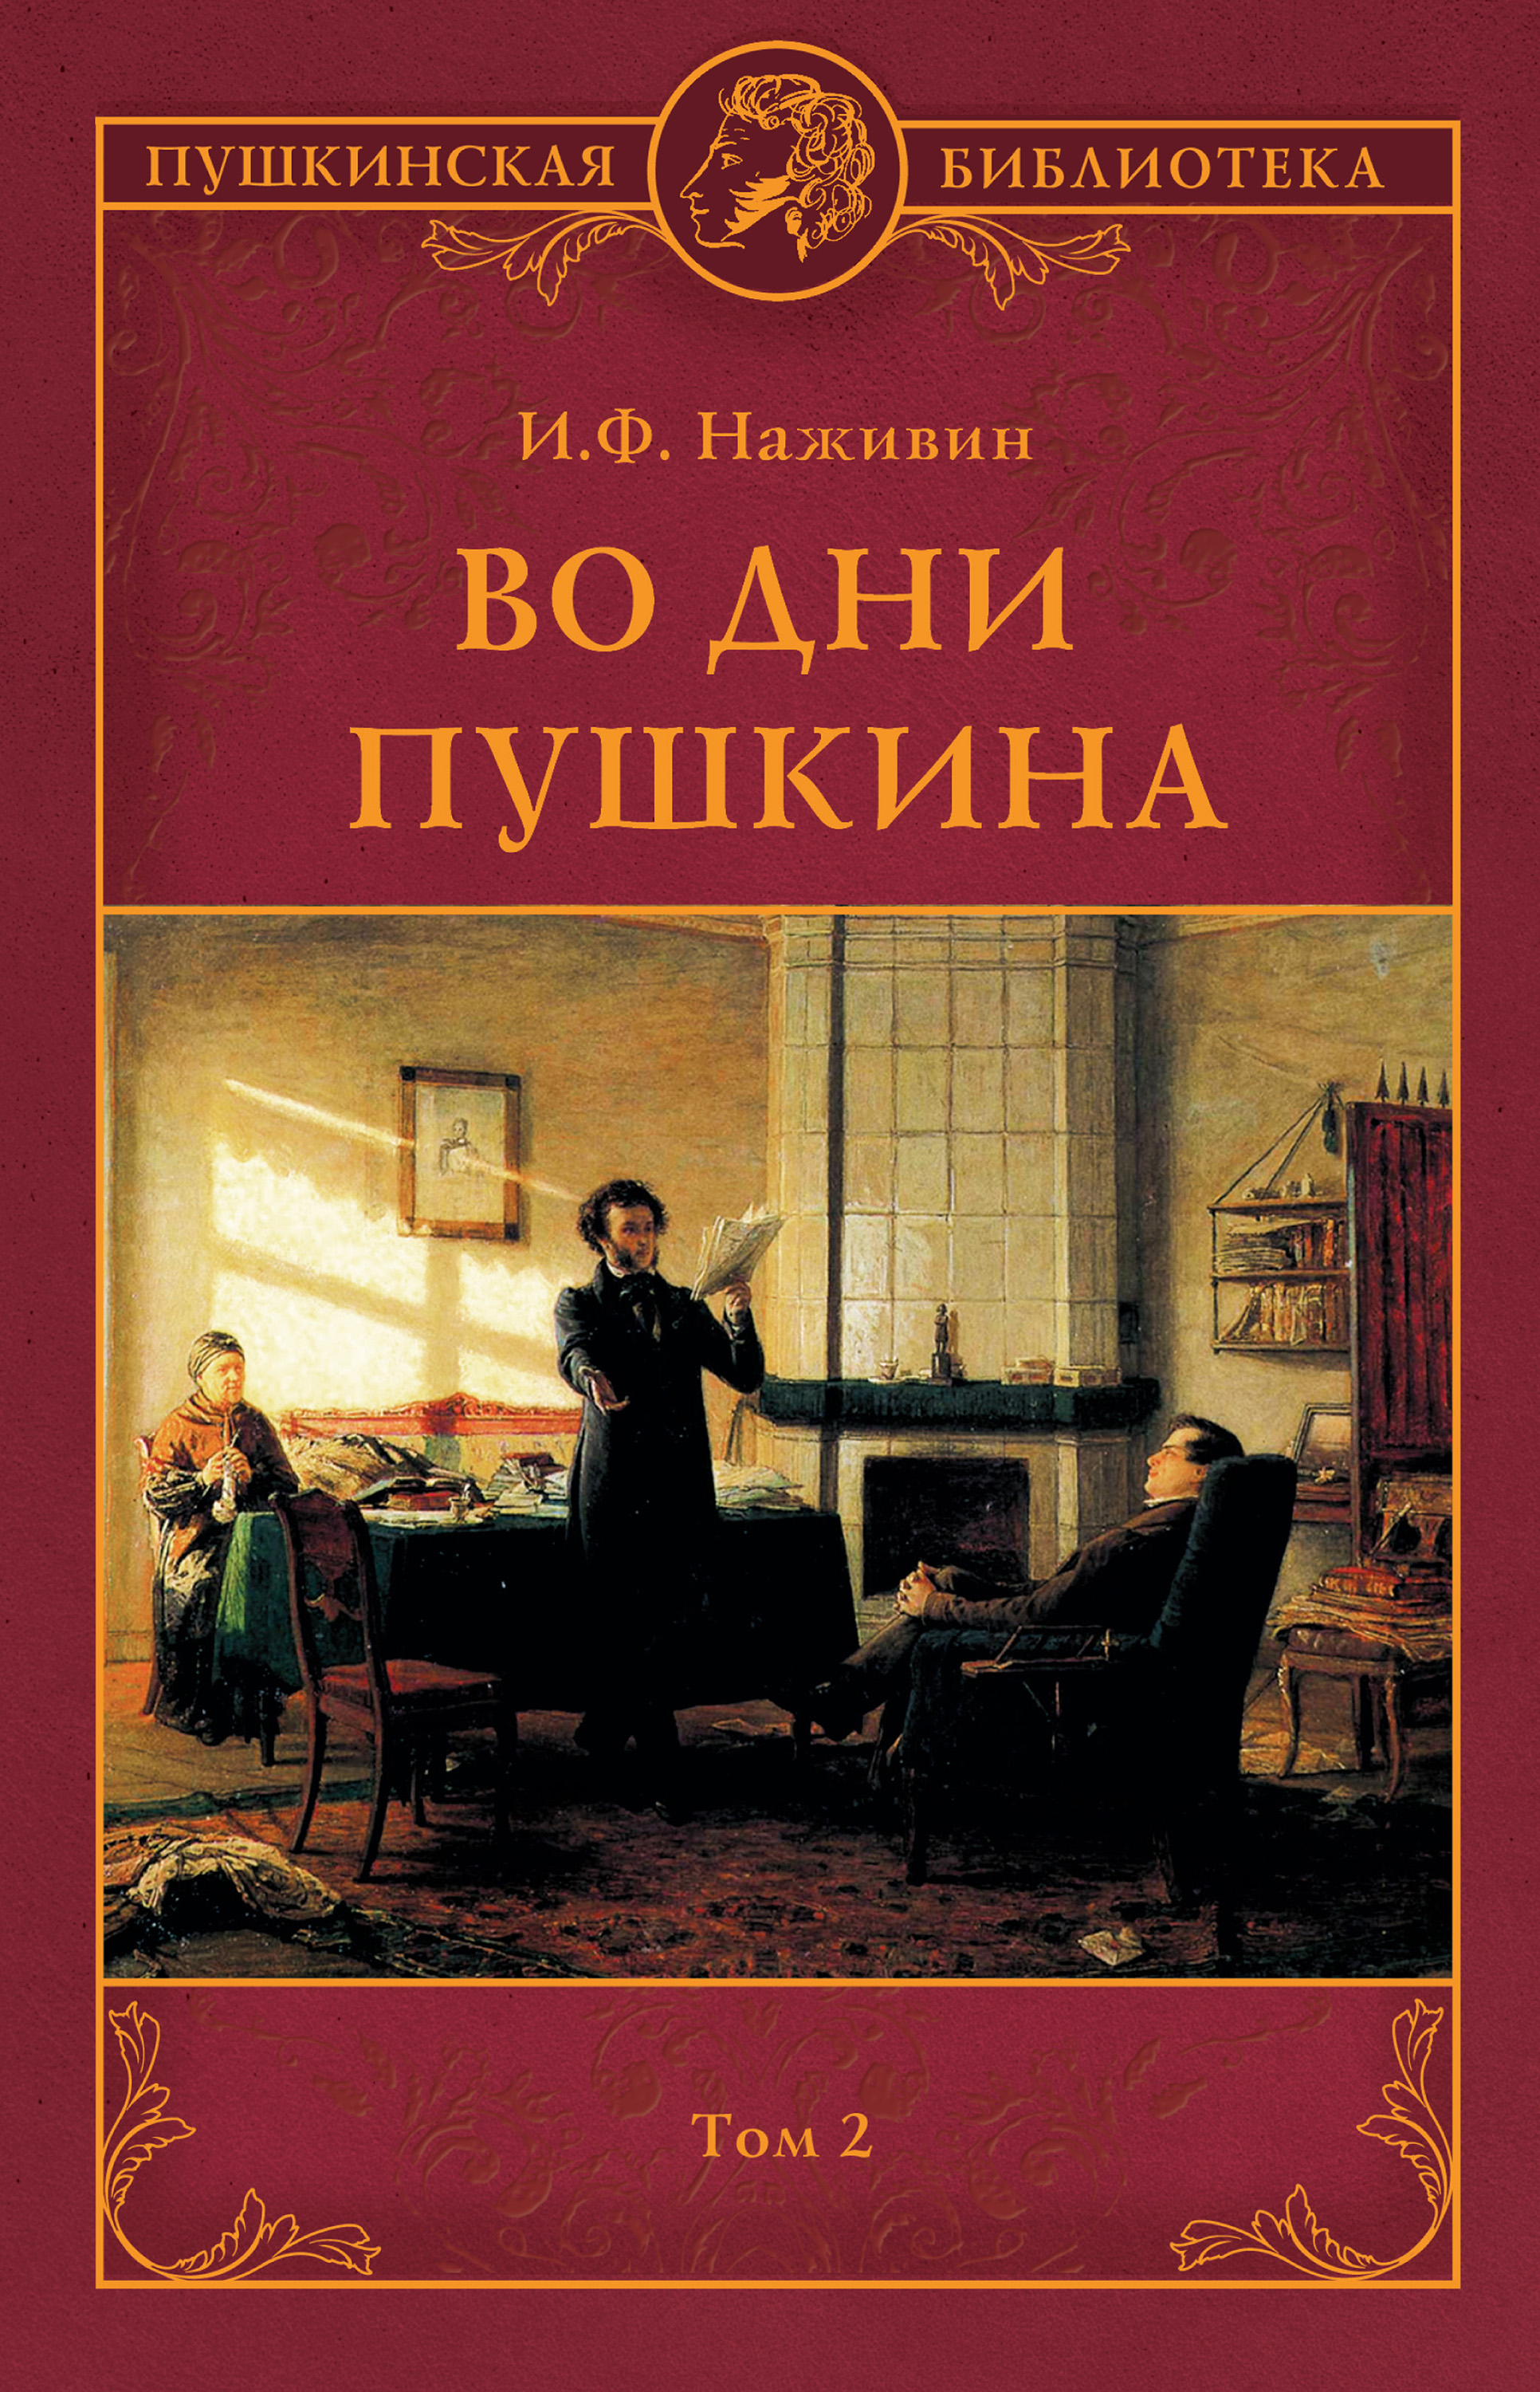 Был ли Пушкин декабристом?